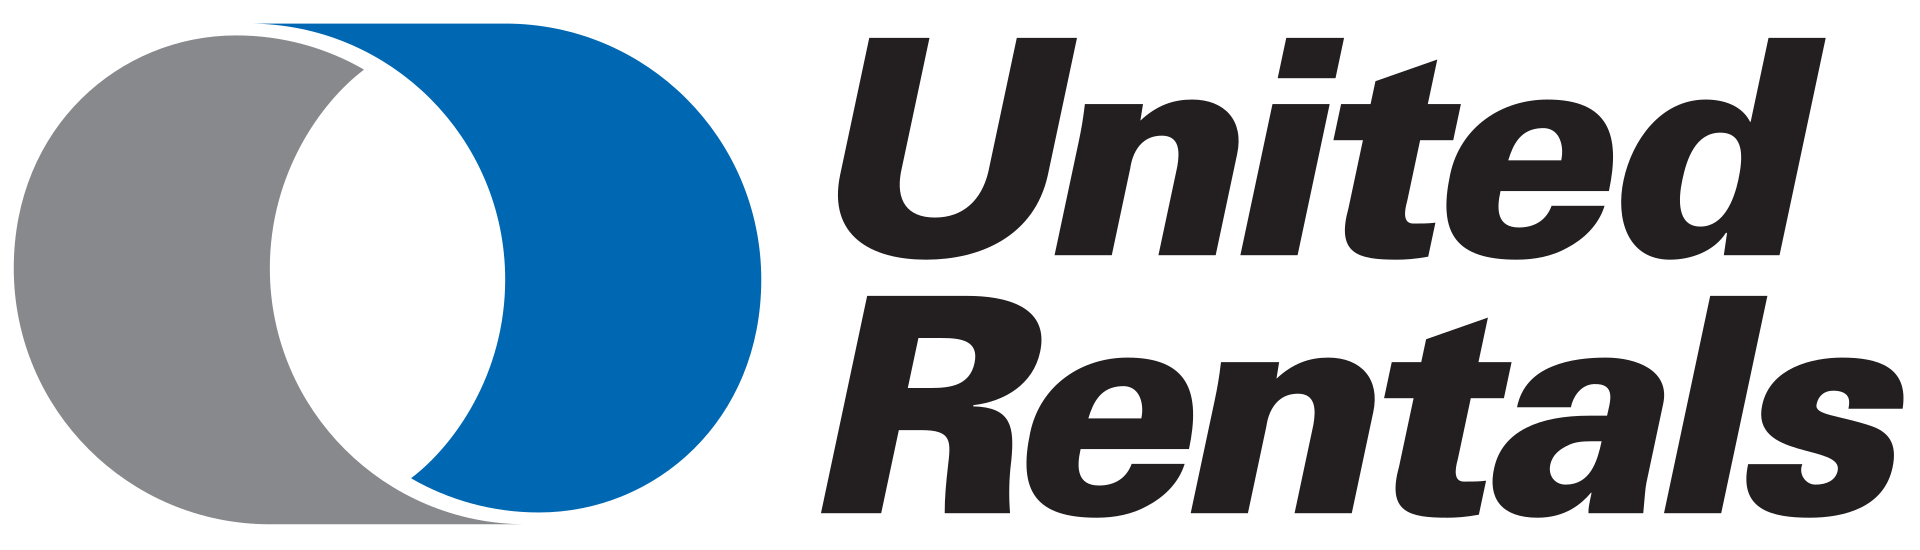 United Rentals Brand Logo